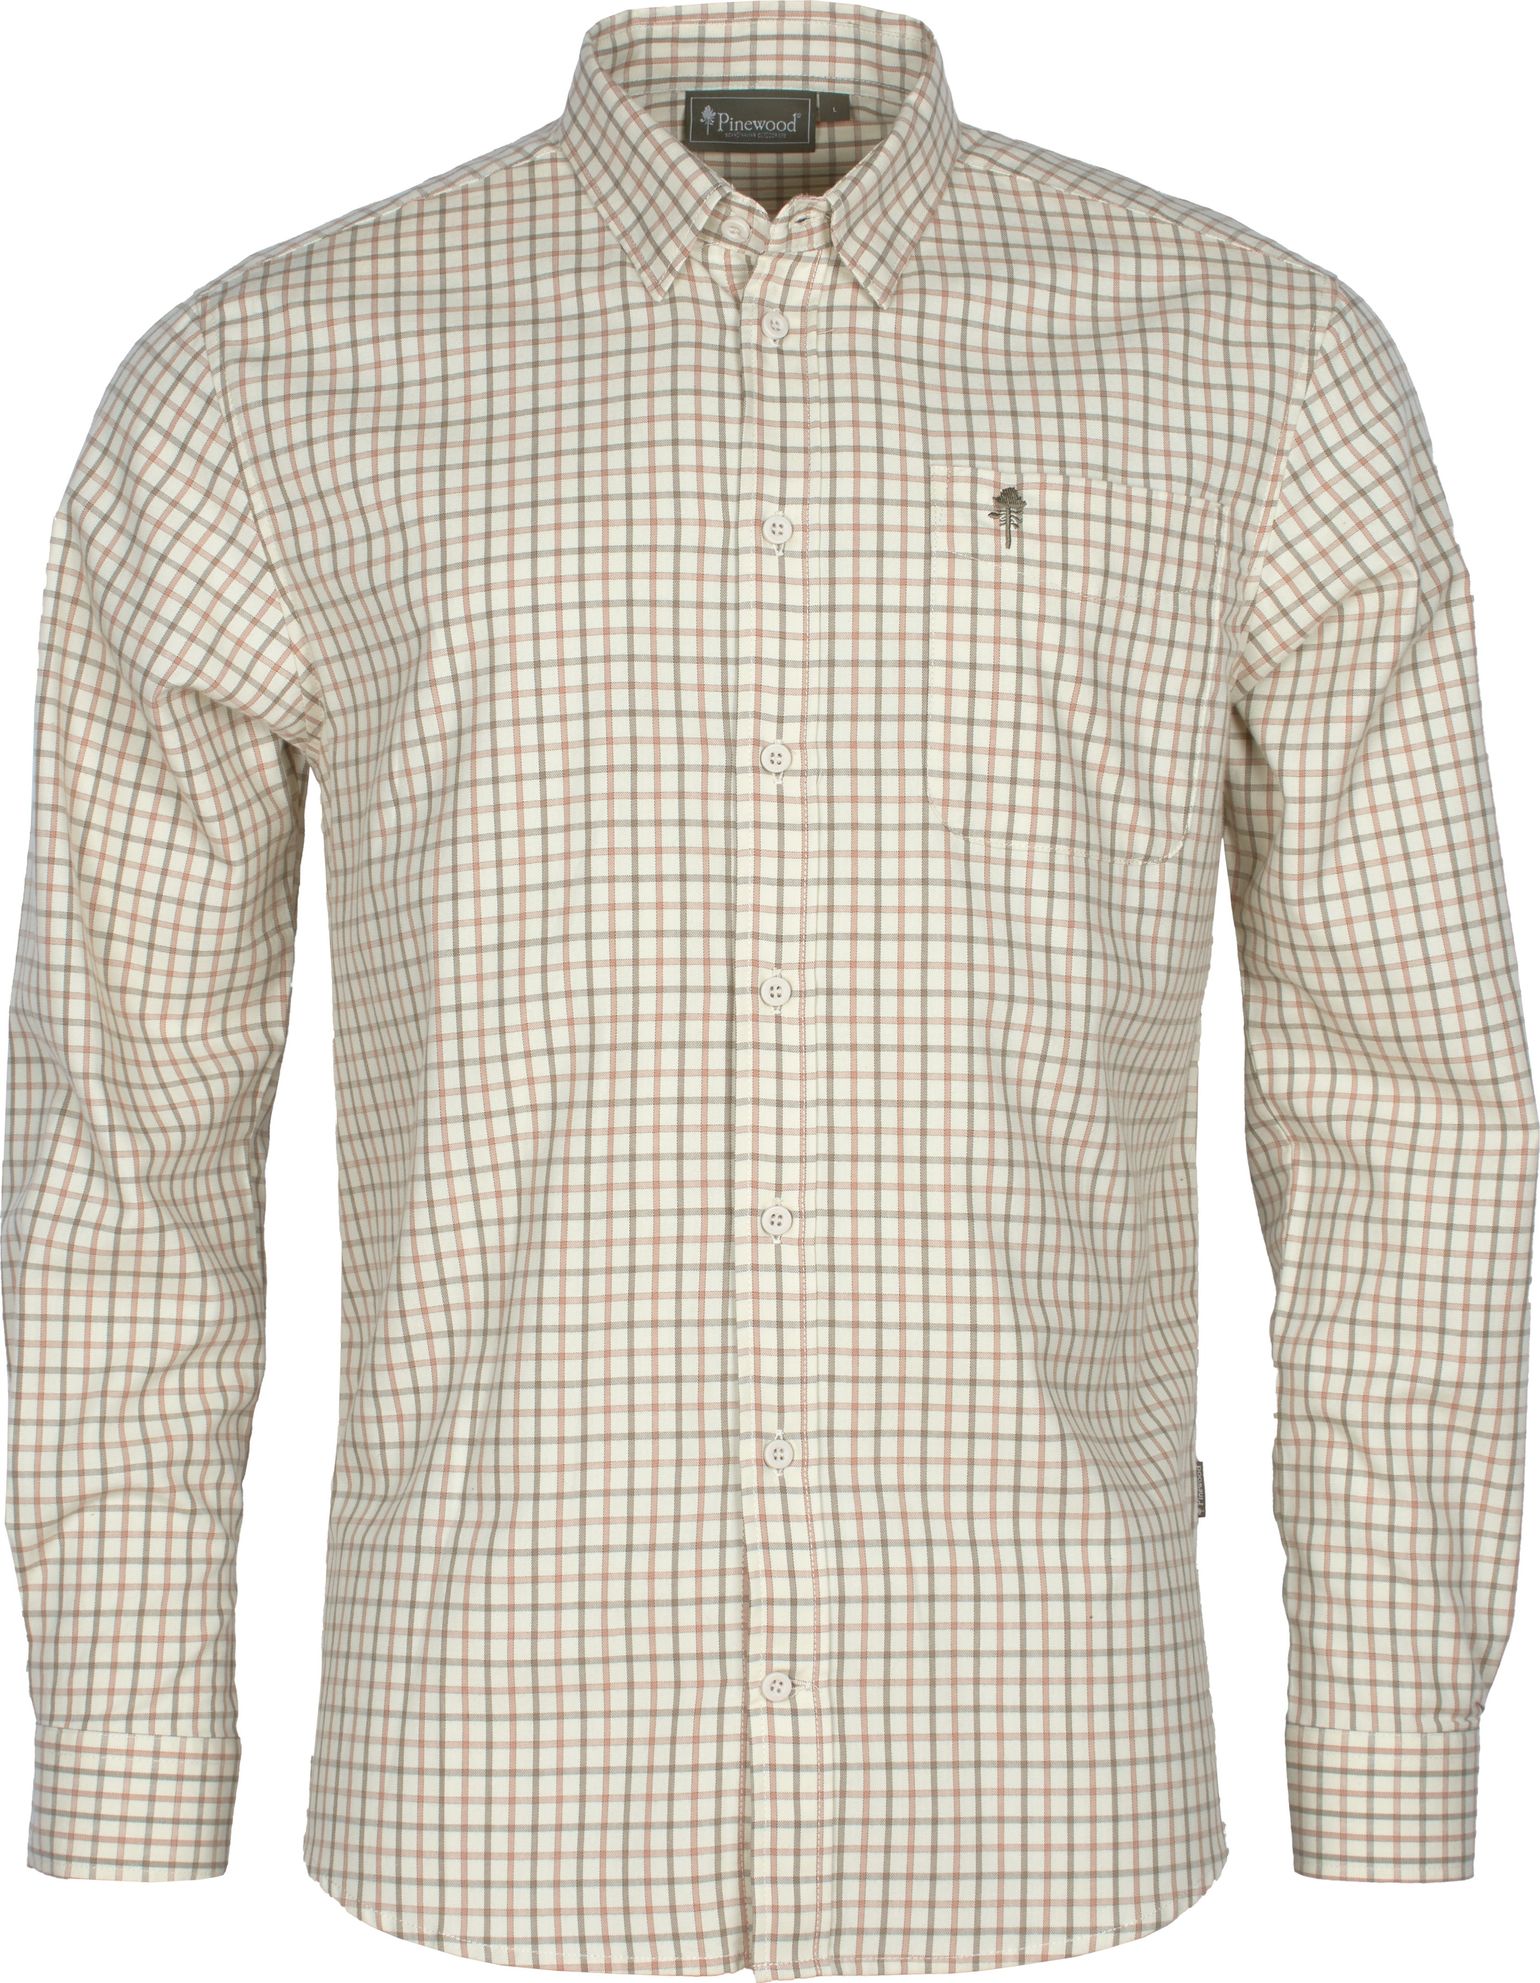 Men's Nydala Grouse Shirt Offwhite/Green